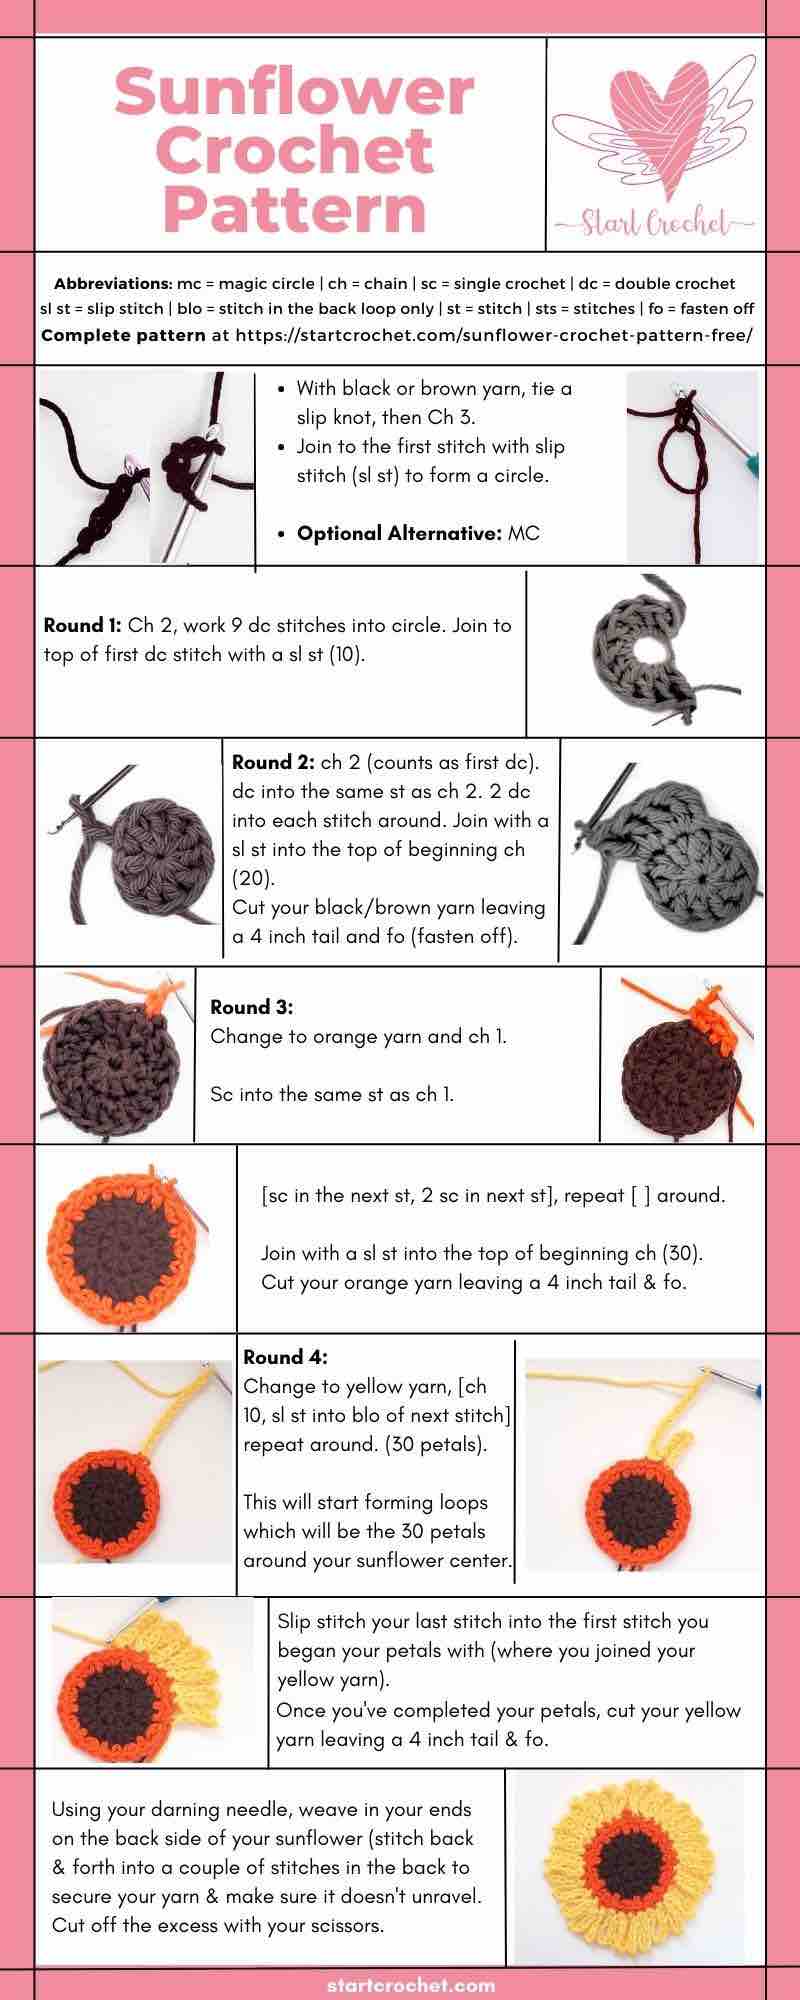 Sunflower-Crochet-Pattern-Infographic